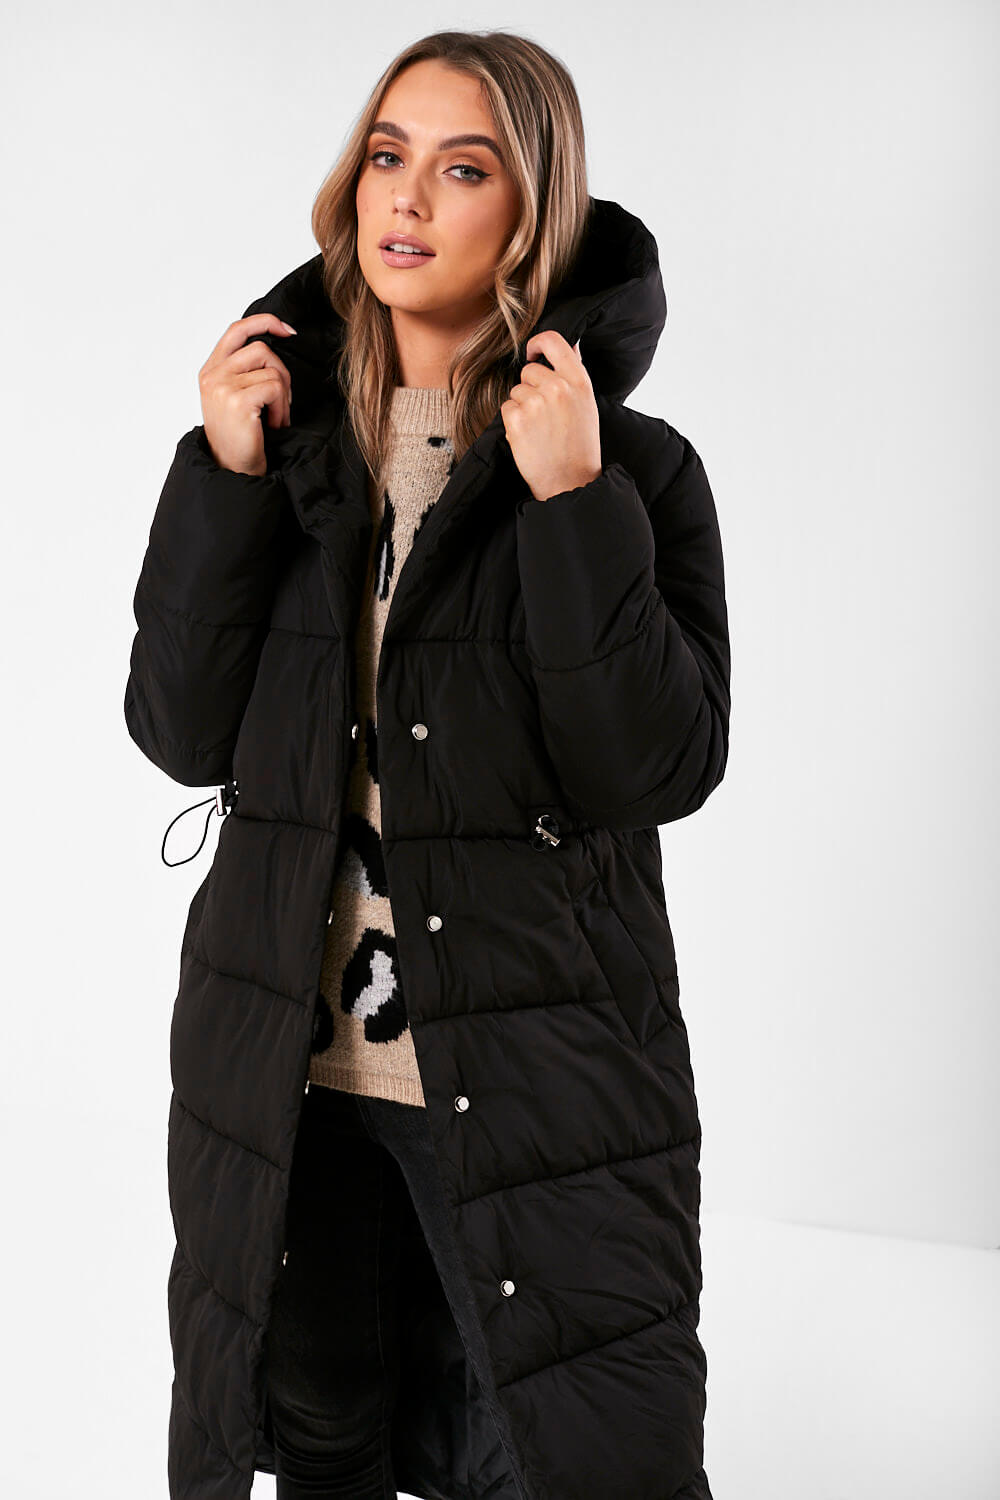 Pixie Daisy Renee Longline Puffer Jacket in Black | iCLOTHING - iCLOTHING